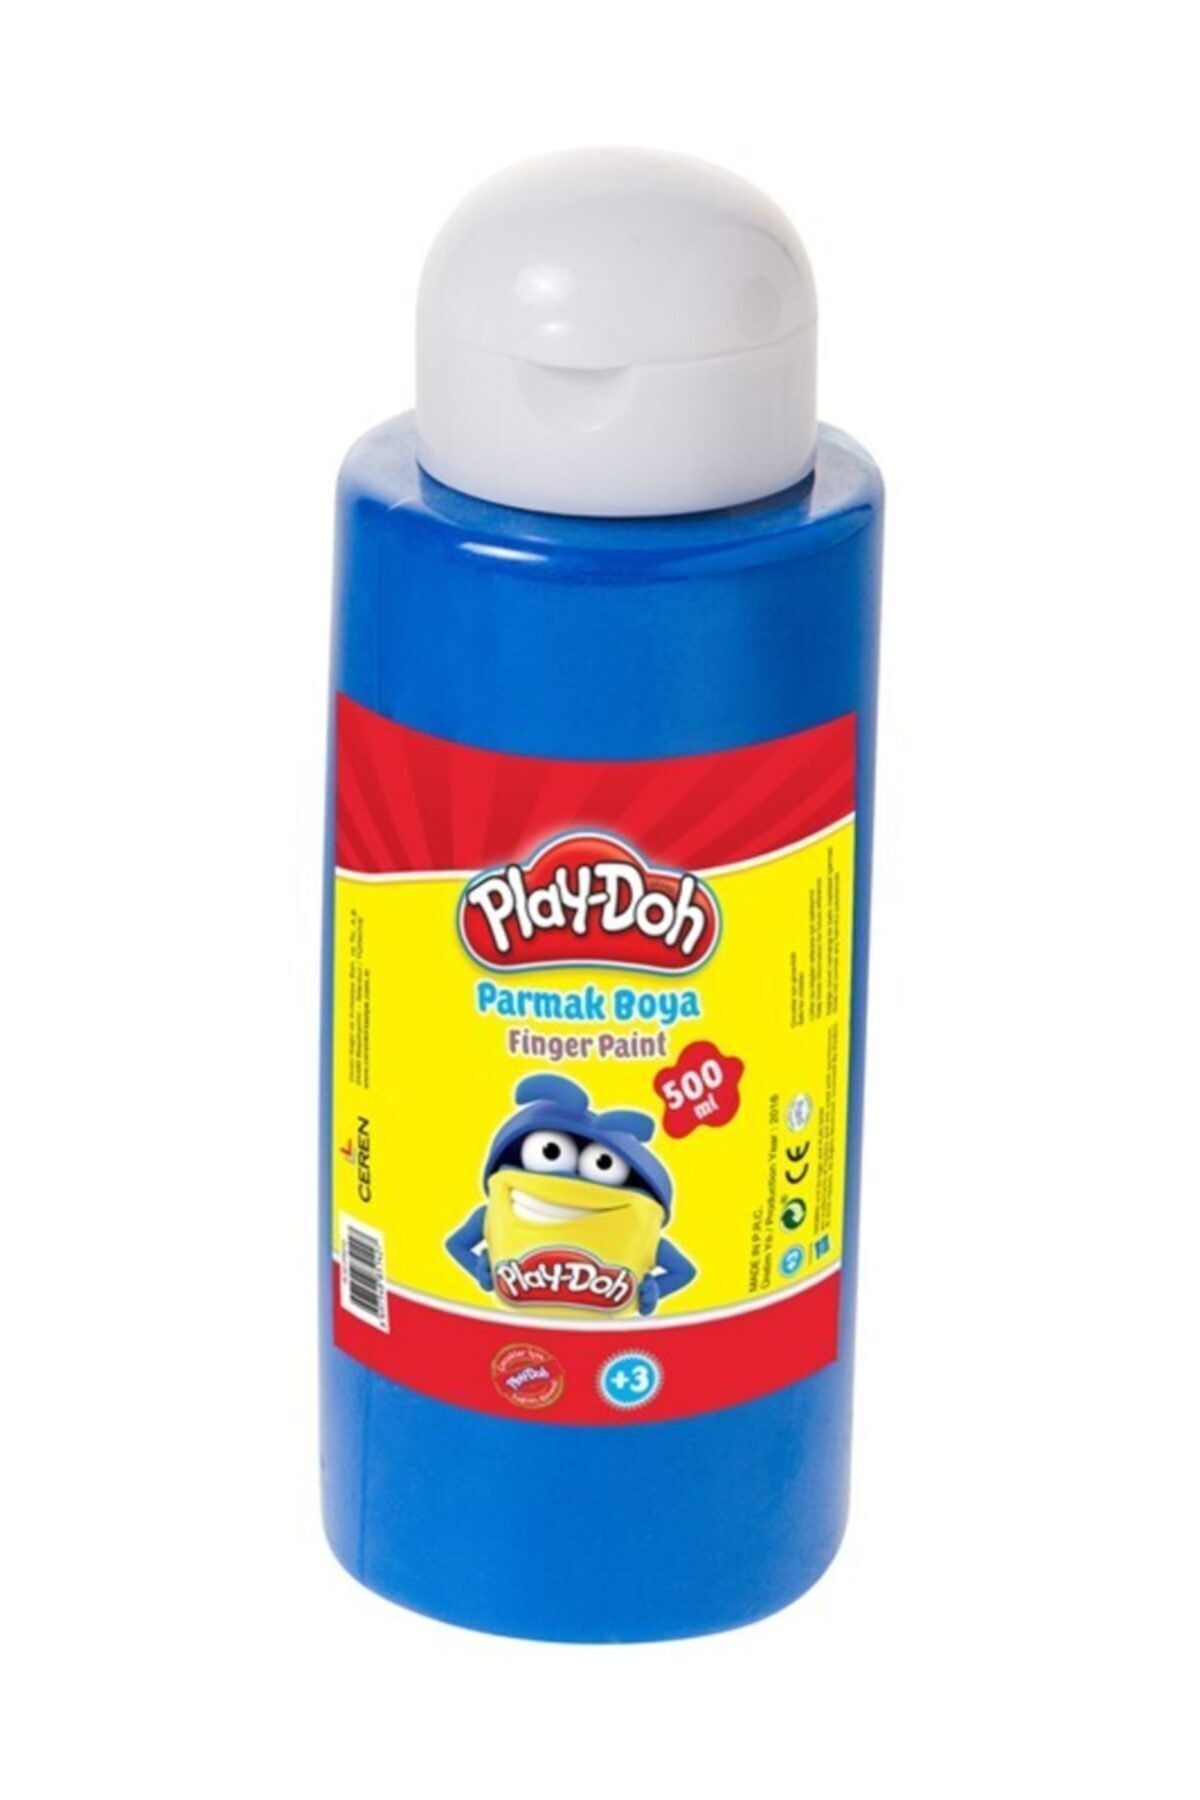 Play Doh Play-doh Parmak Boyası Mavi 500 ml Pr010